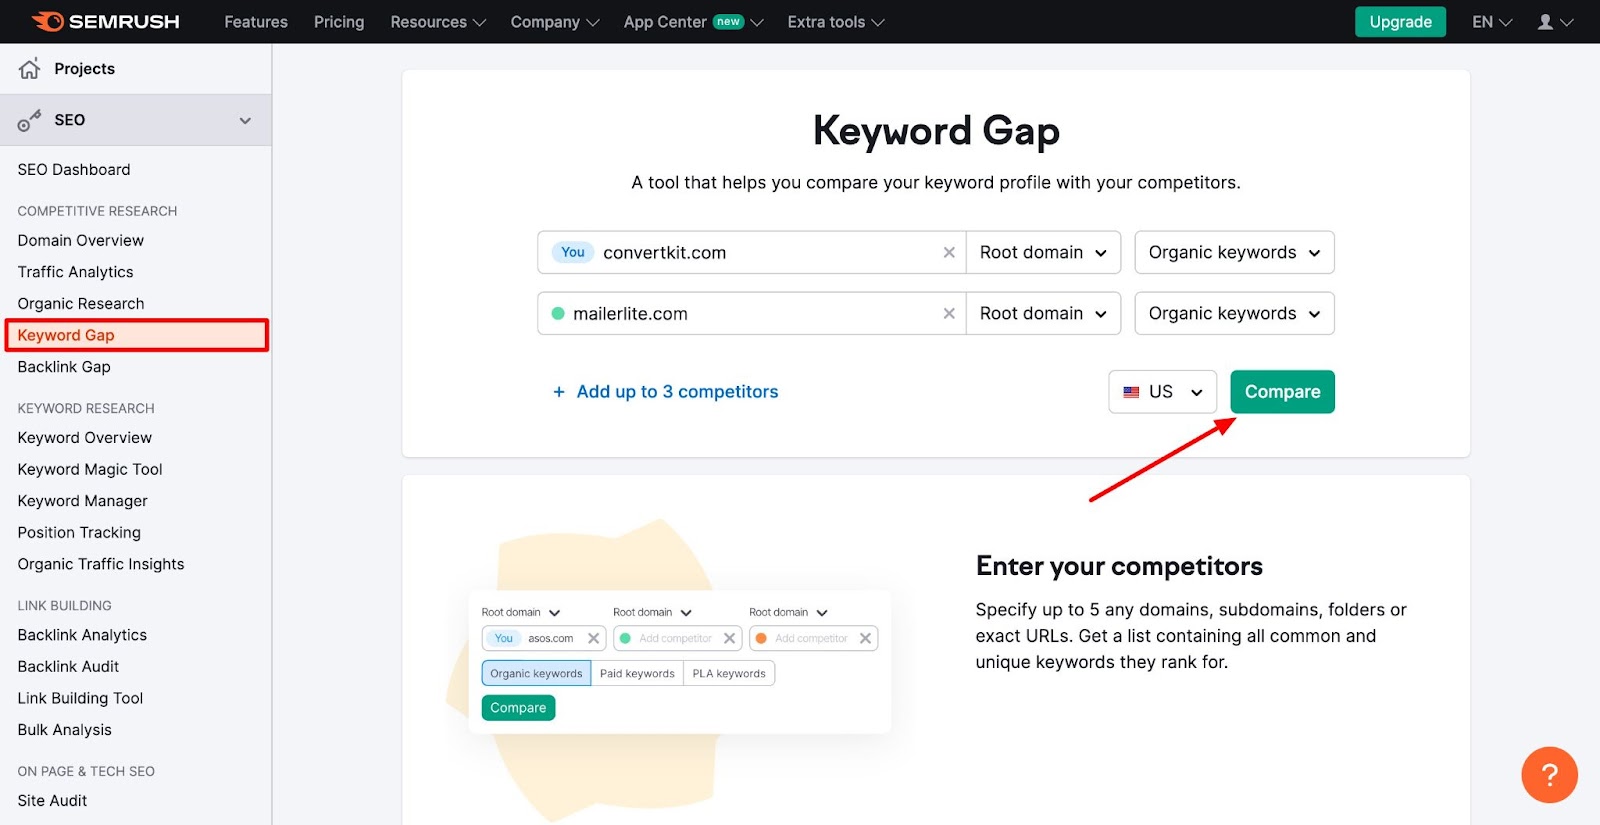 Semrush’s Keyword Gap tool - How to Find Competitors Keywords